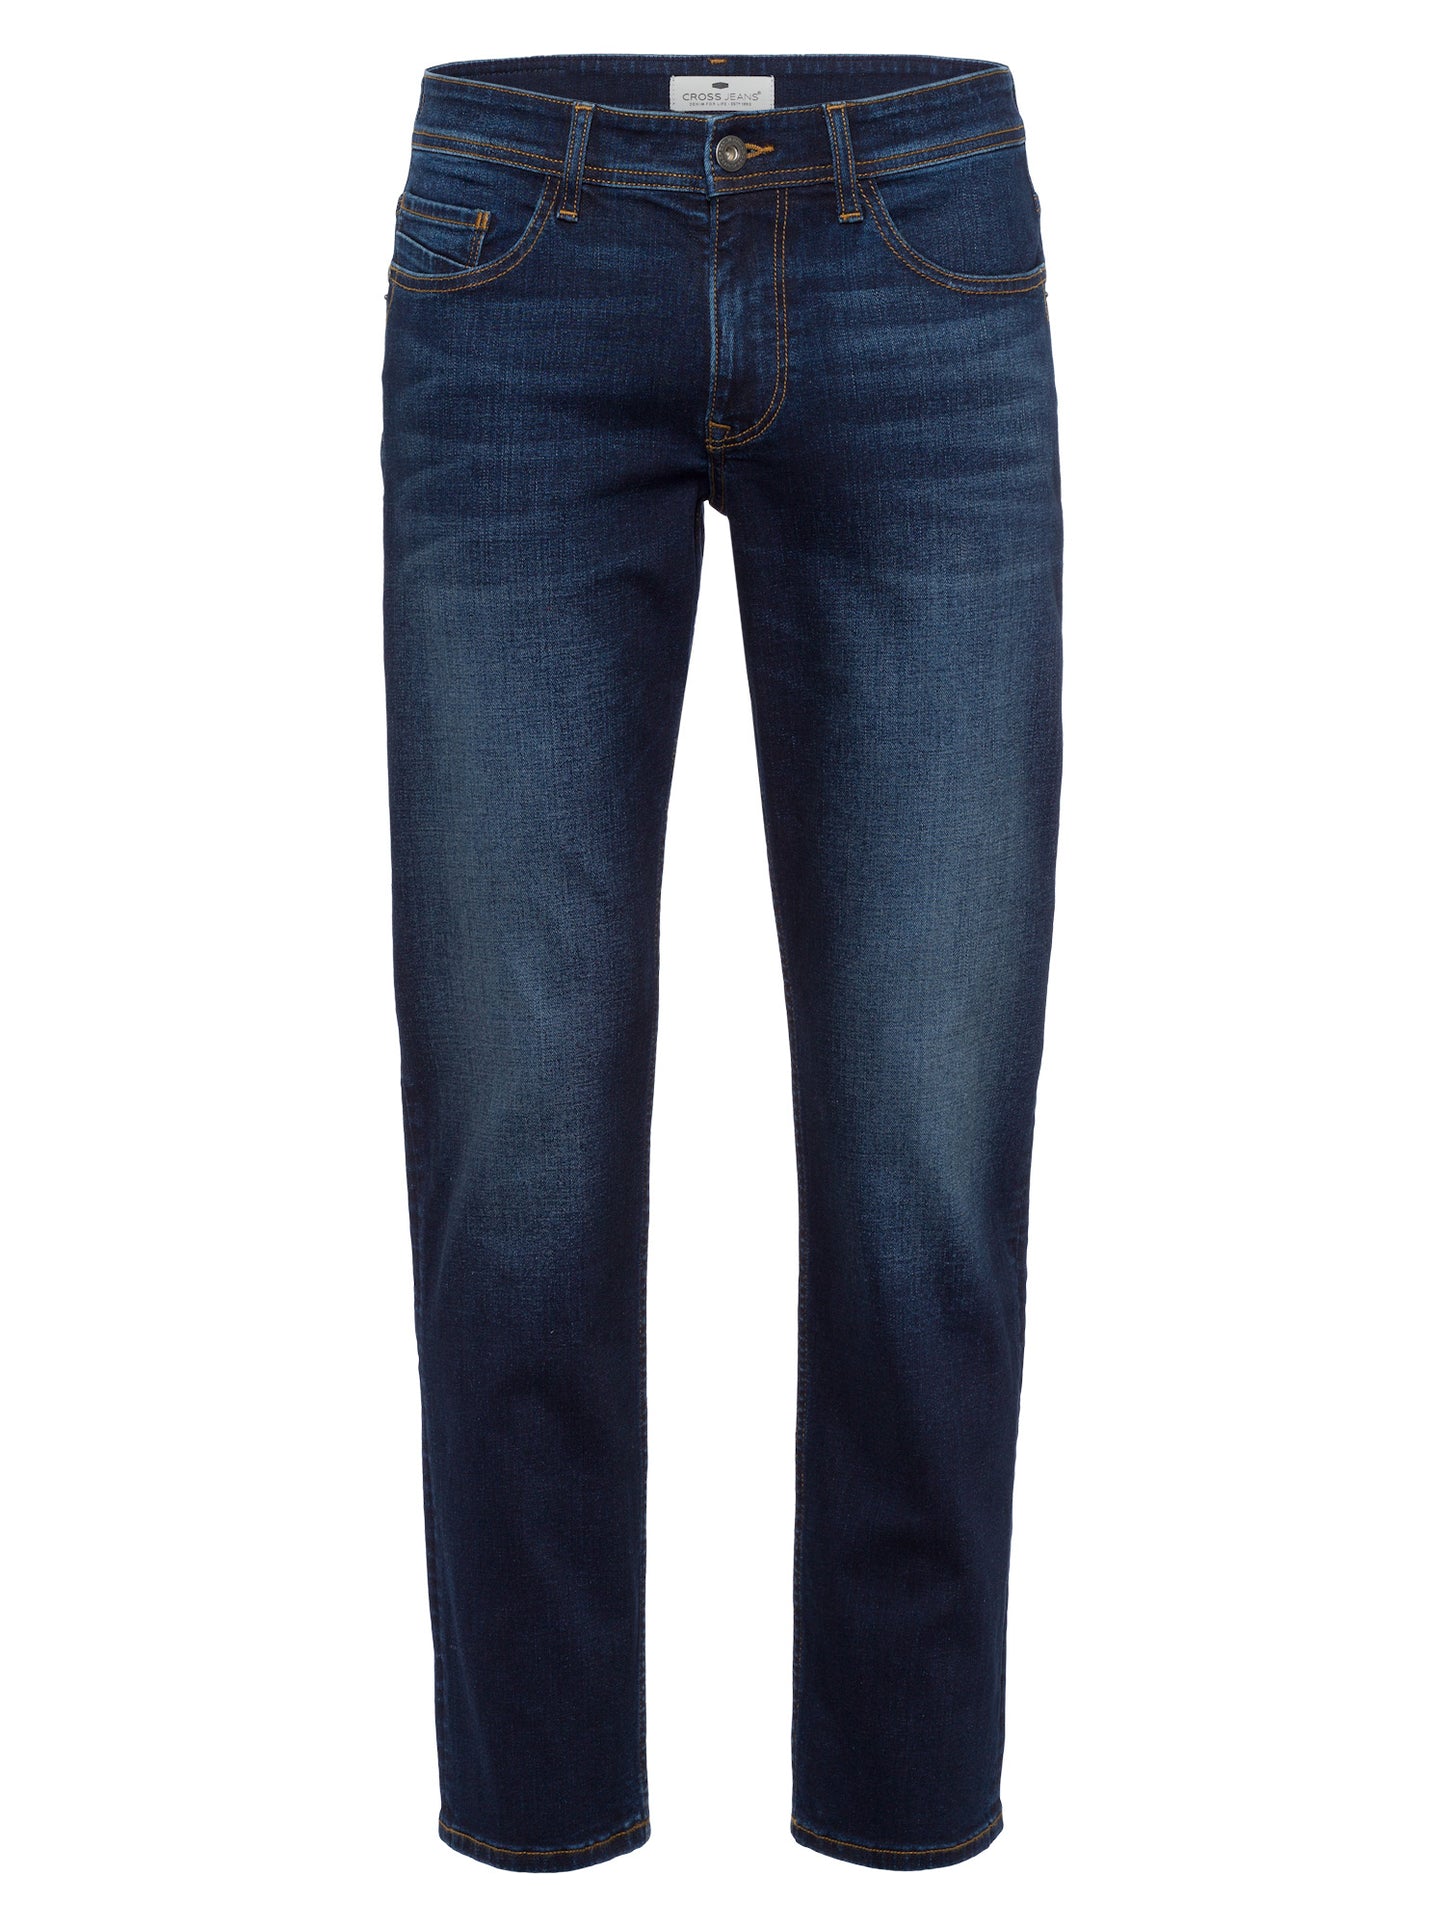 Antonio Herren Jeans Relaxed Fit Regular Waist Straight Leg blau